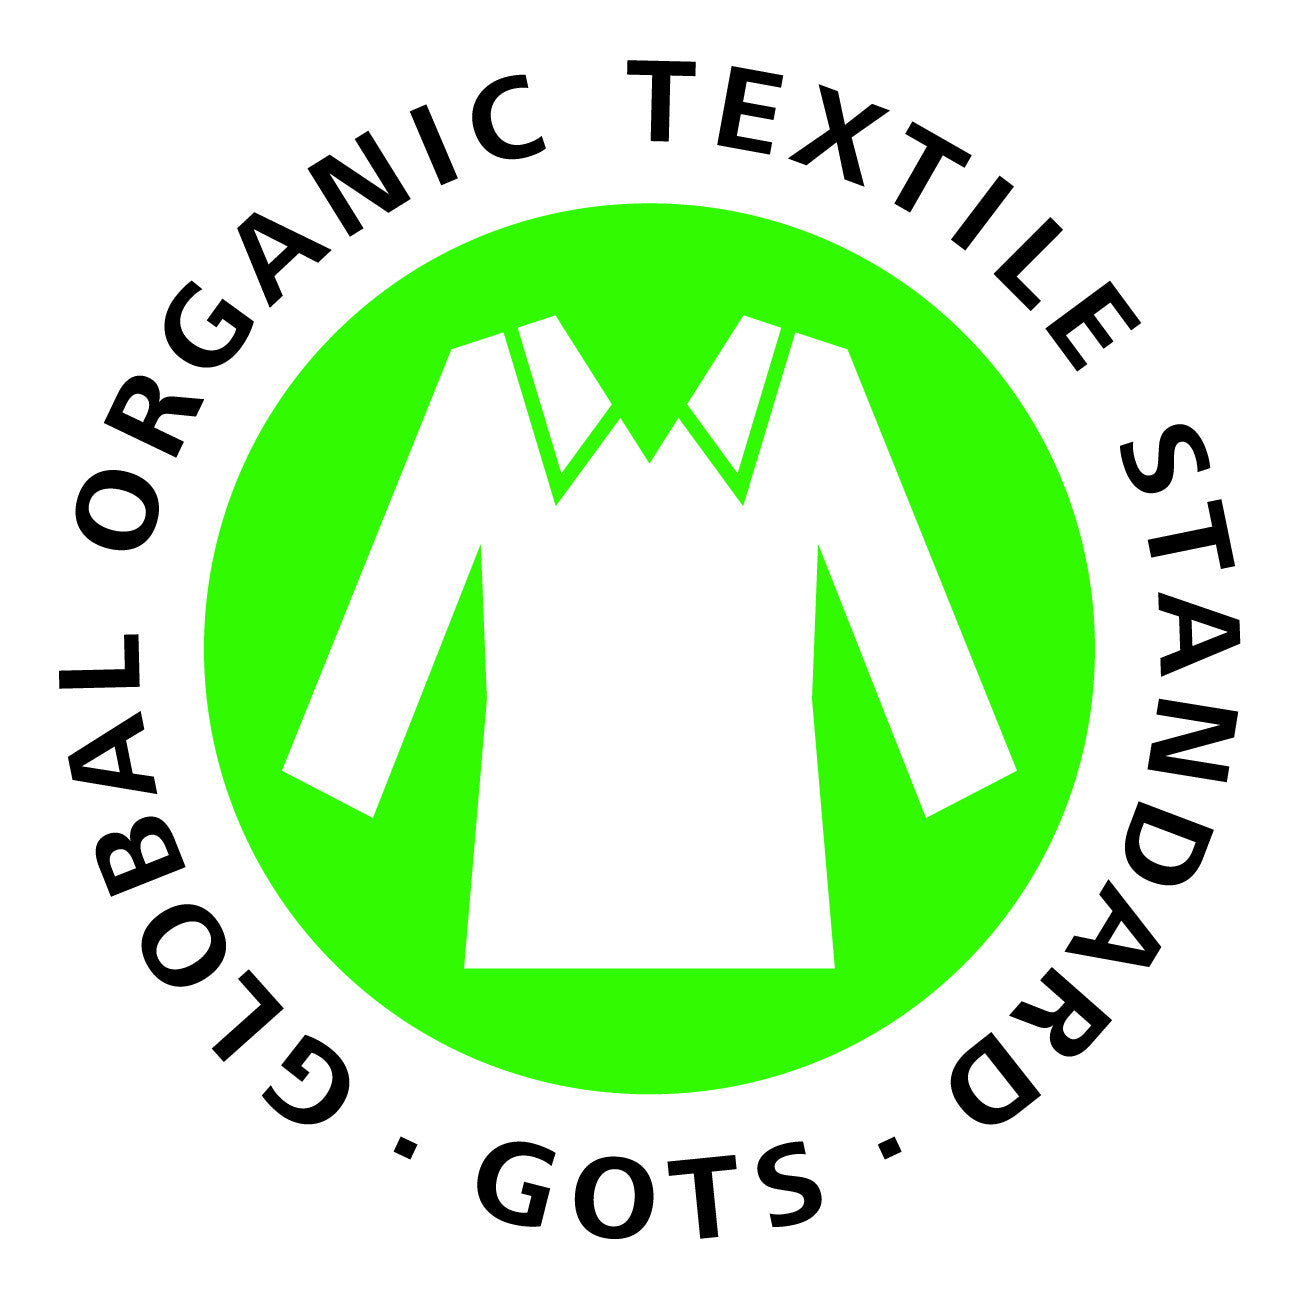 GOTS - Global Organic Textiles Standard